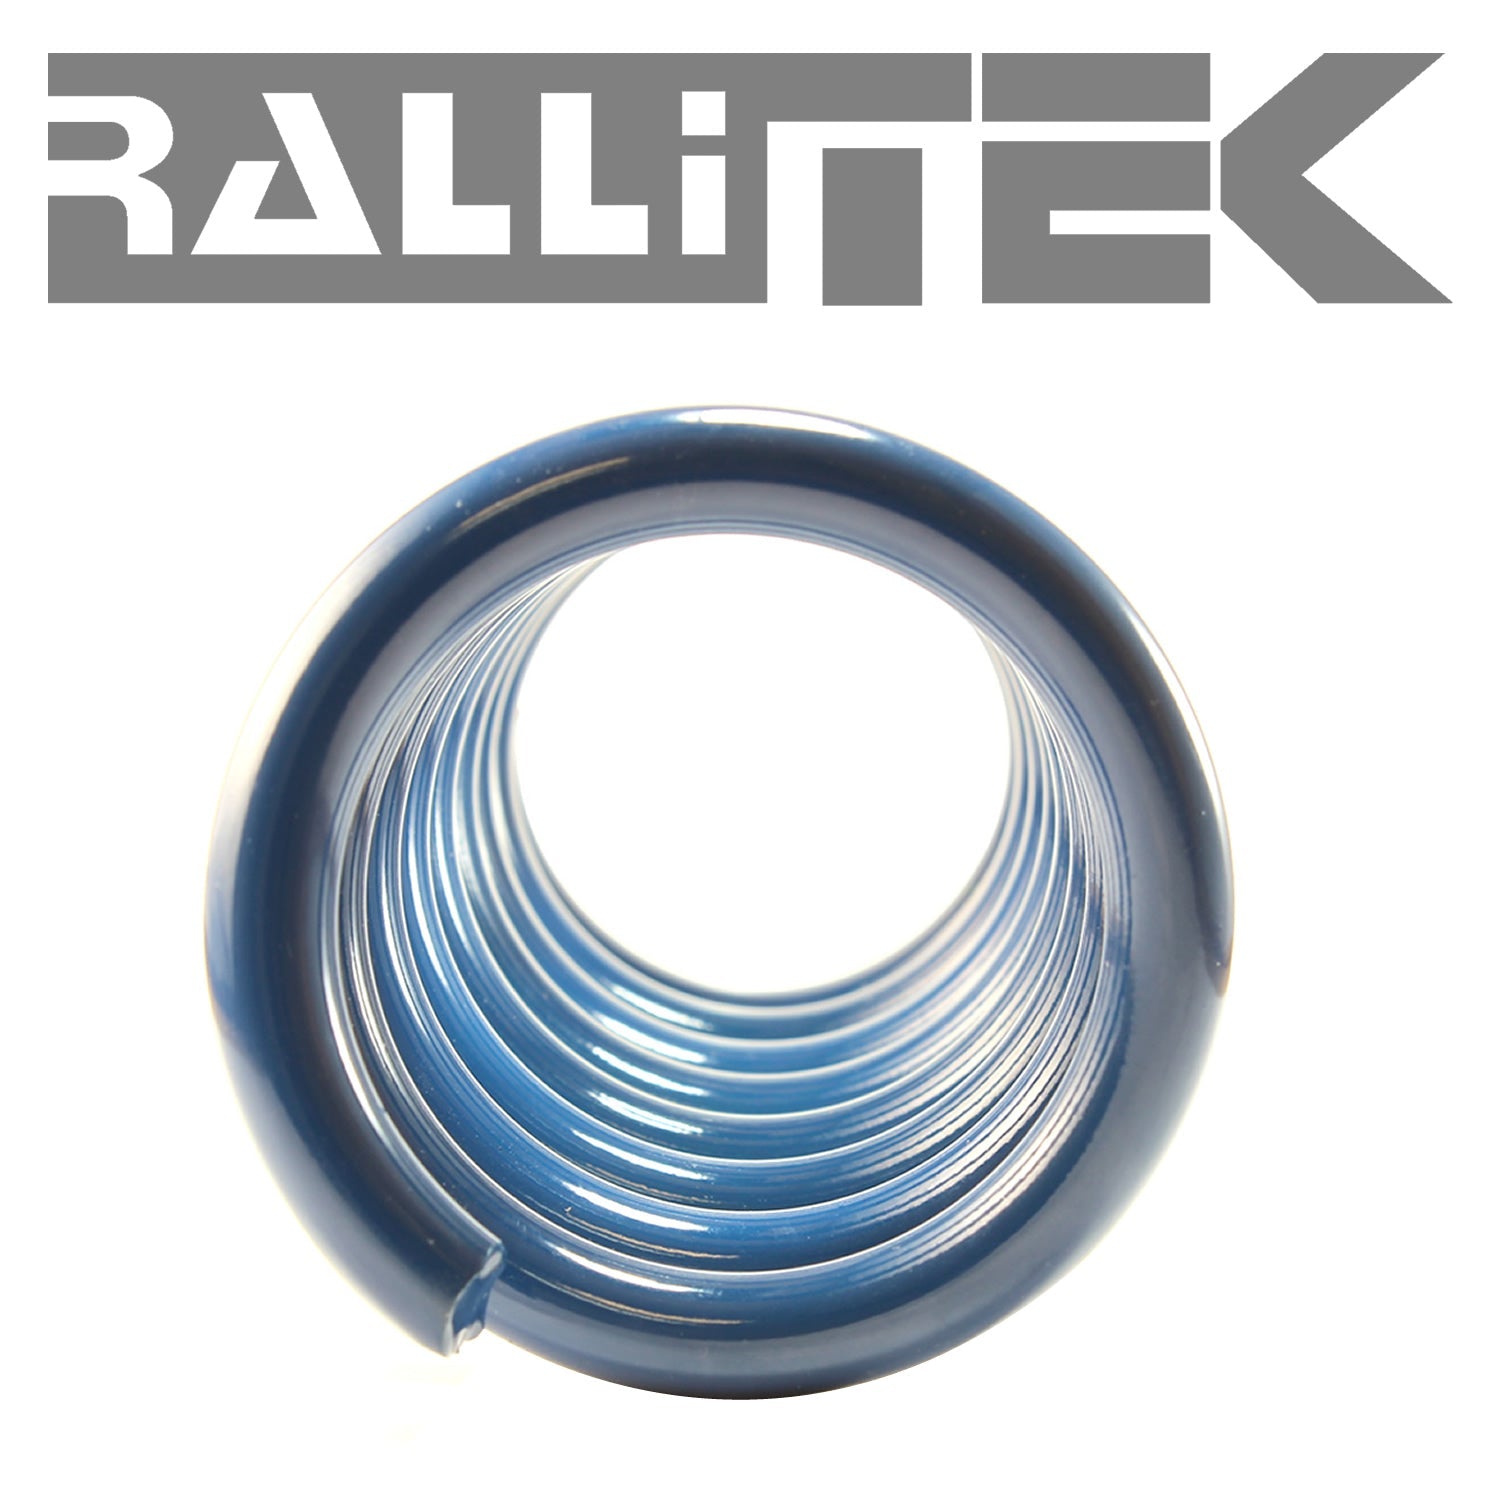 RalliTEK 0.4" Rear Overload Springs & KYB Struts Assembled - Outback 2010-2014